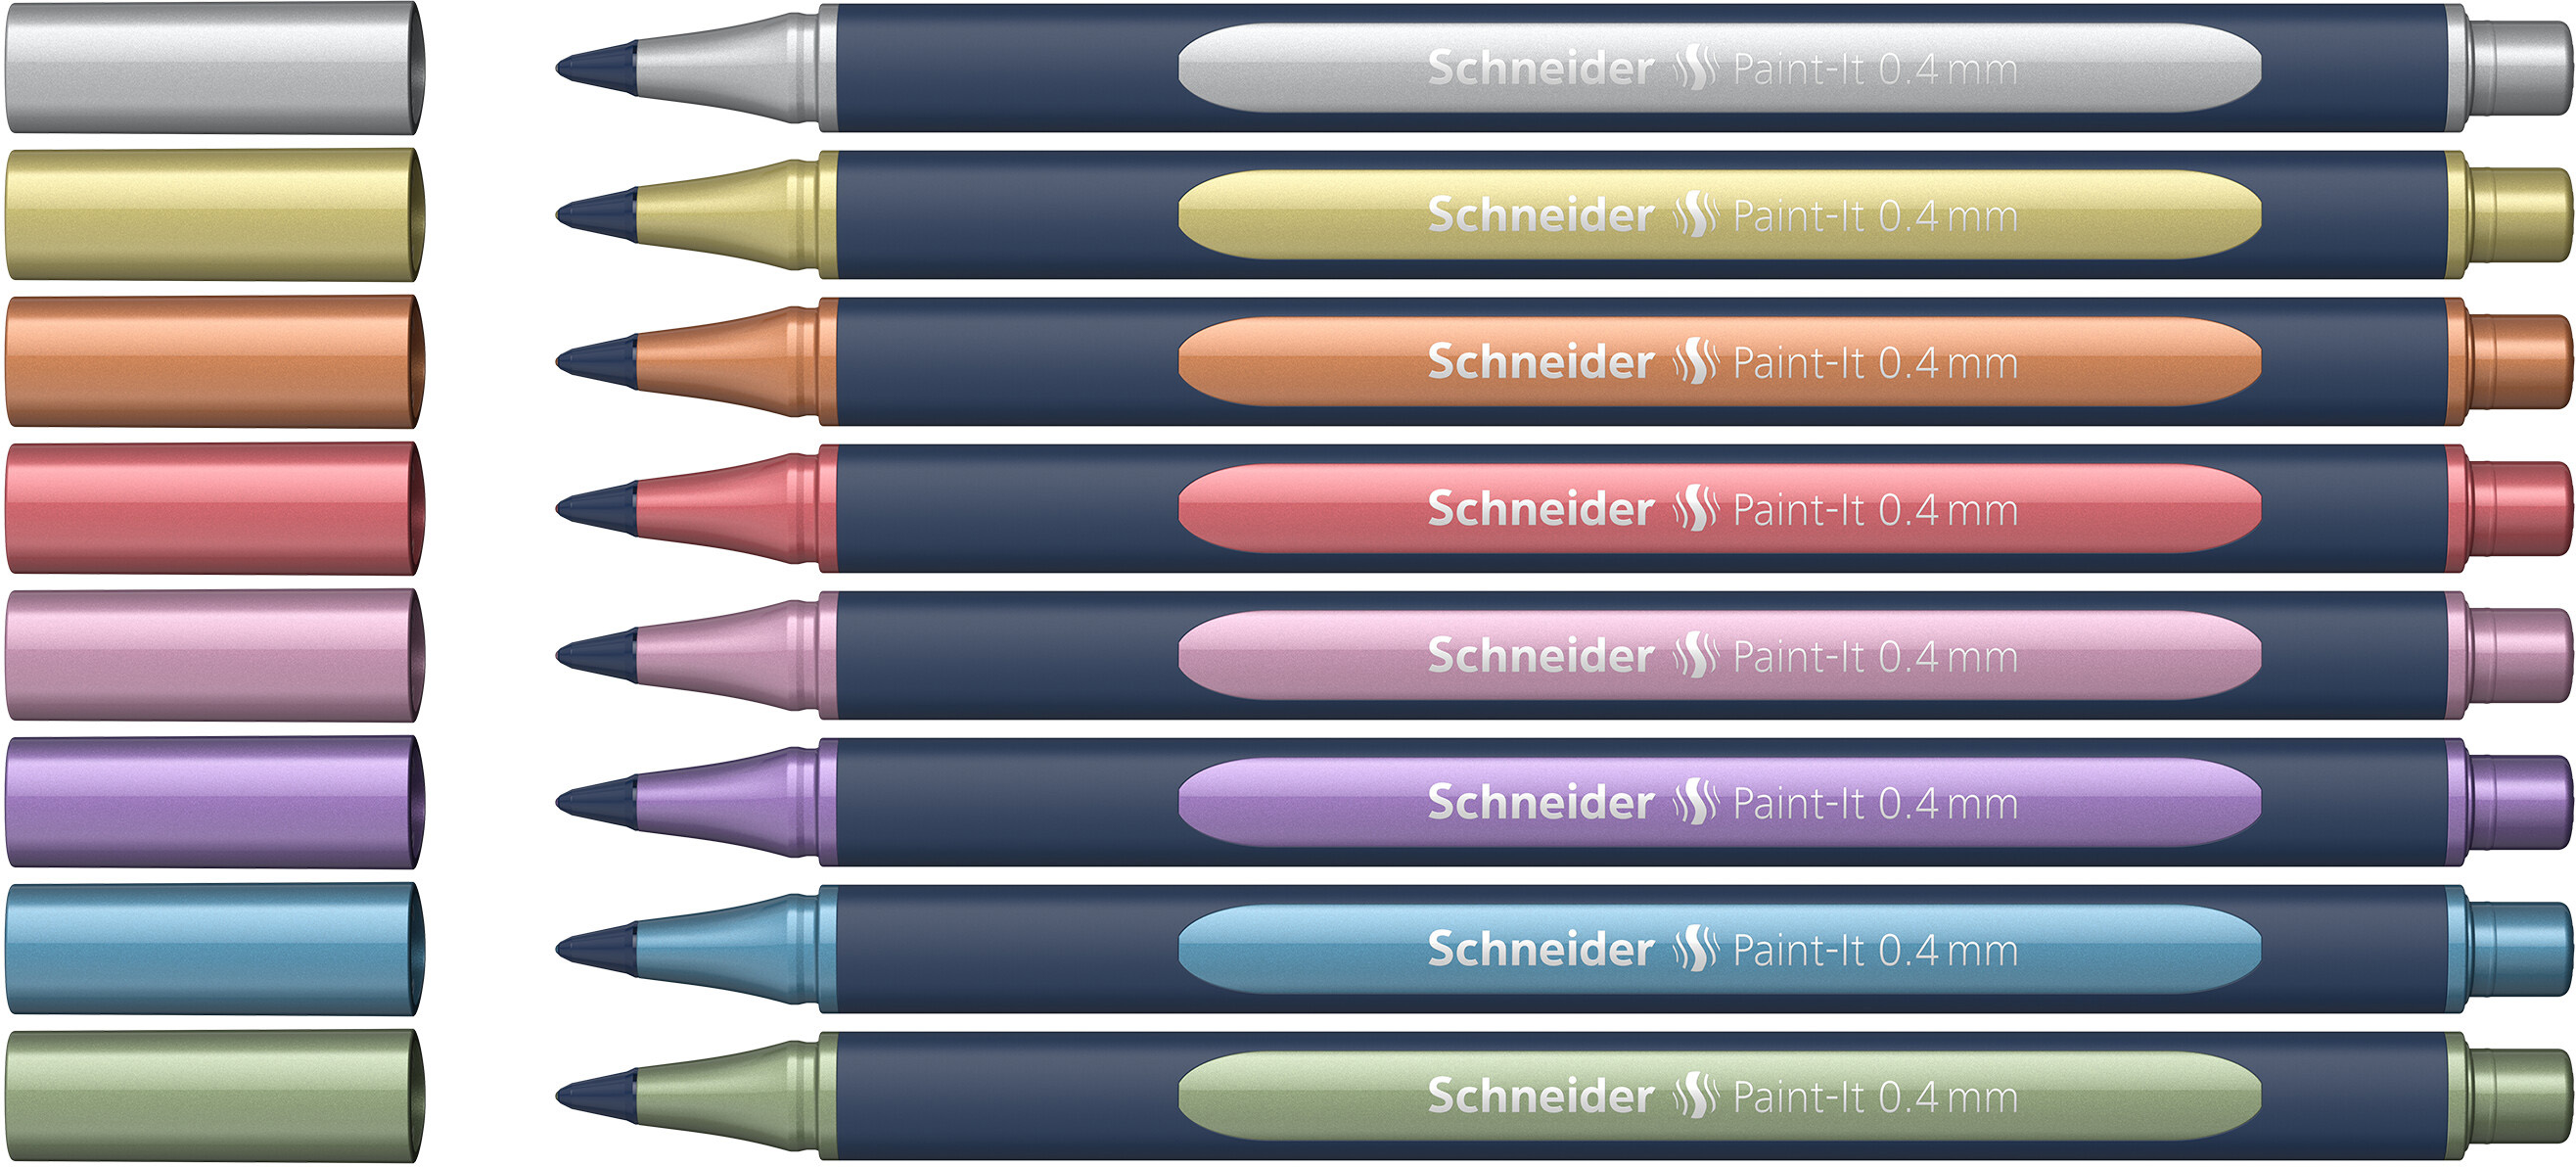 SCHNEIDER Roller Paint-it ML05011502 Etui 8 pcs.